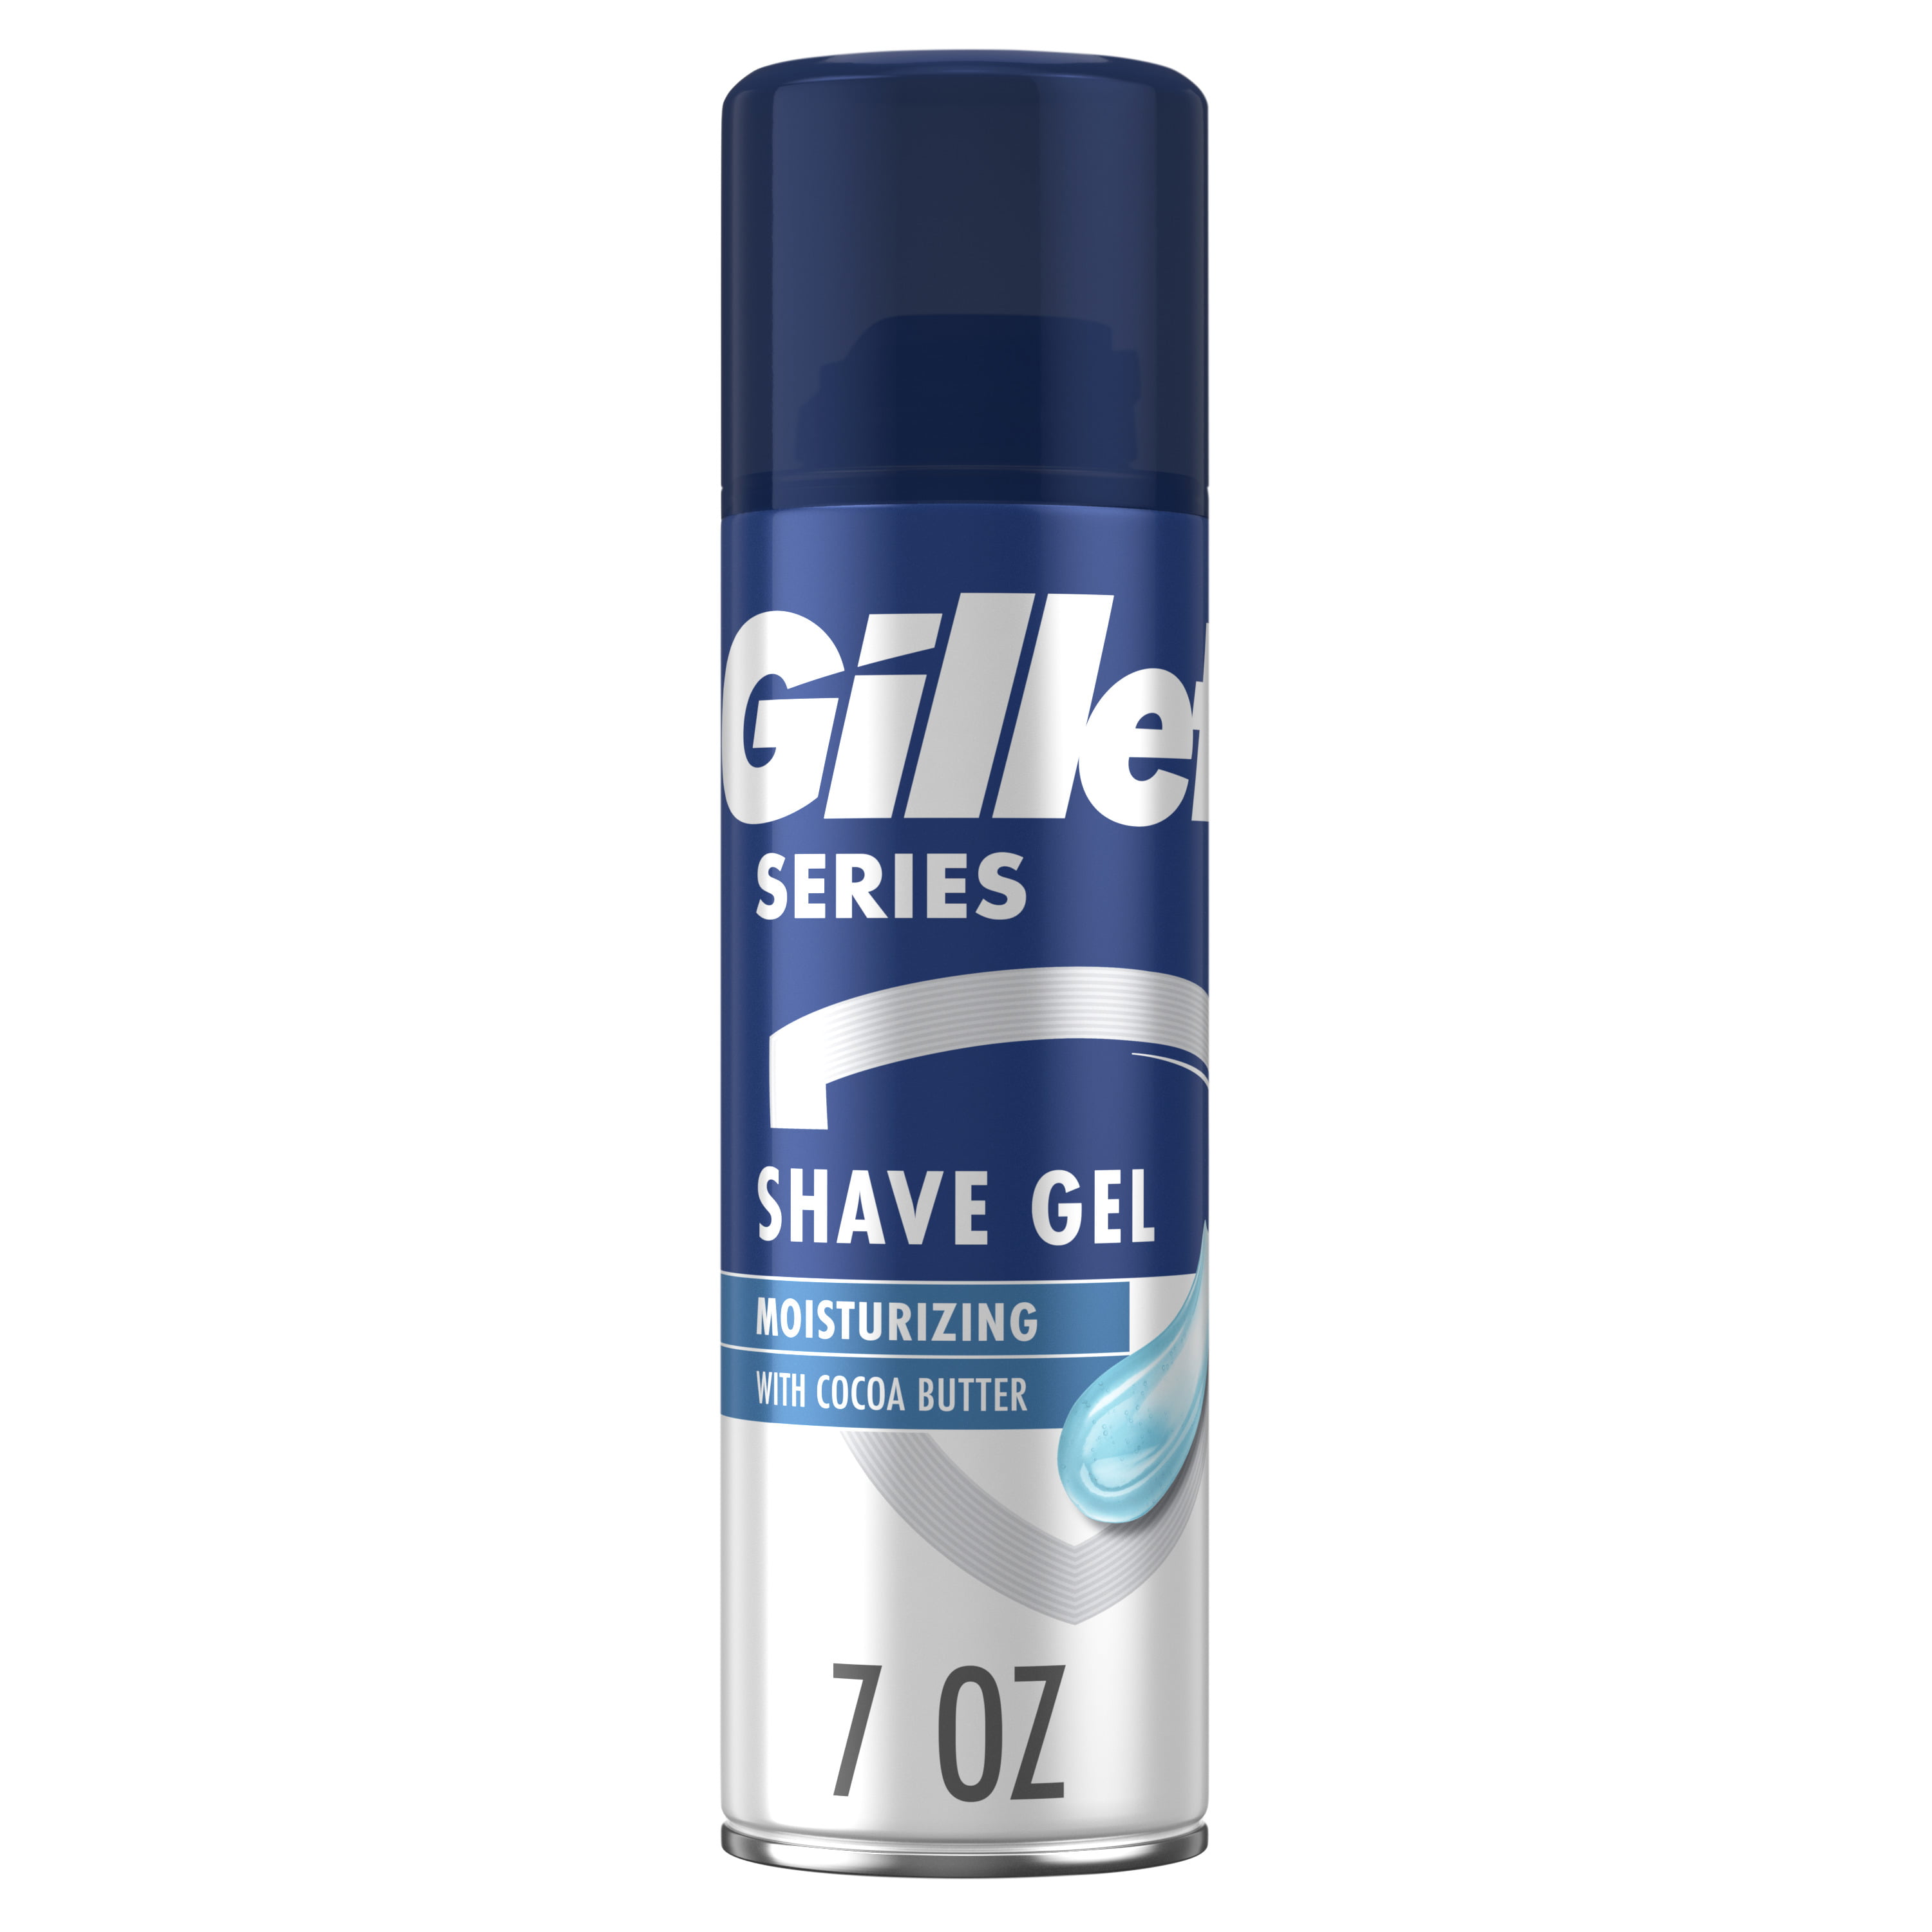 Gillette Men's Shave Gel with Cocoa Butter, 7oz